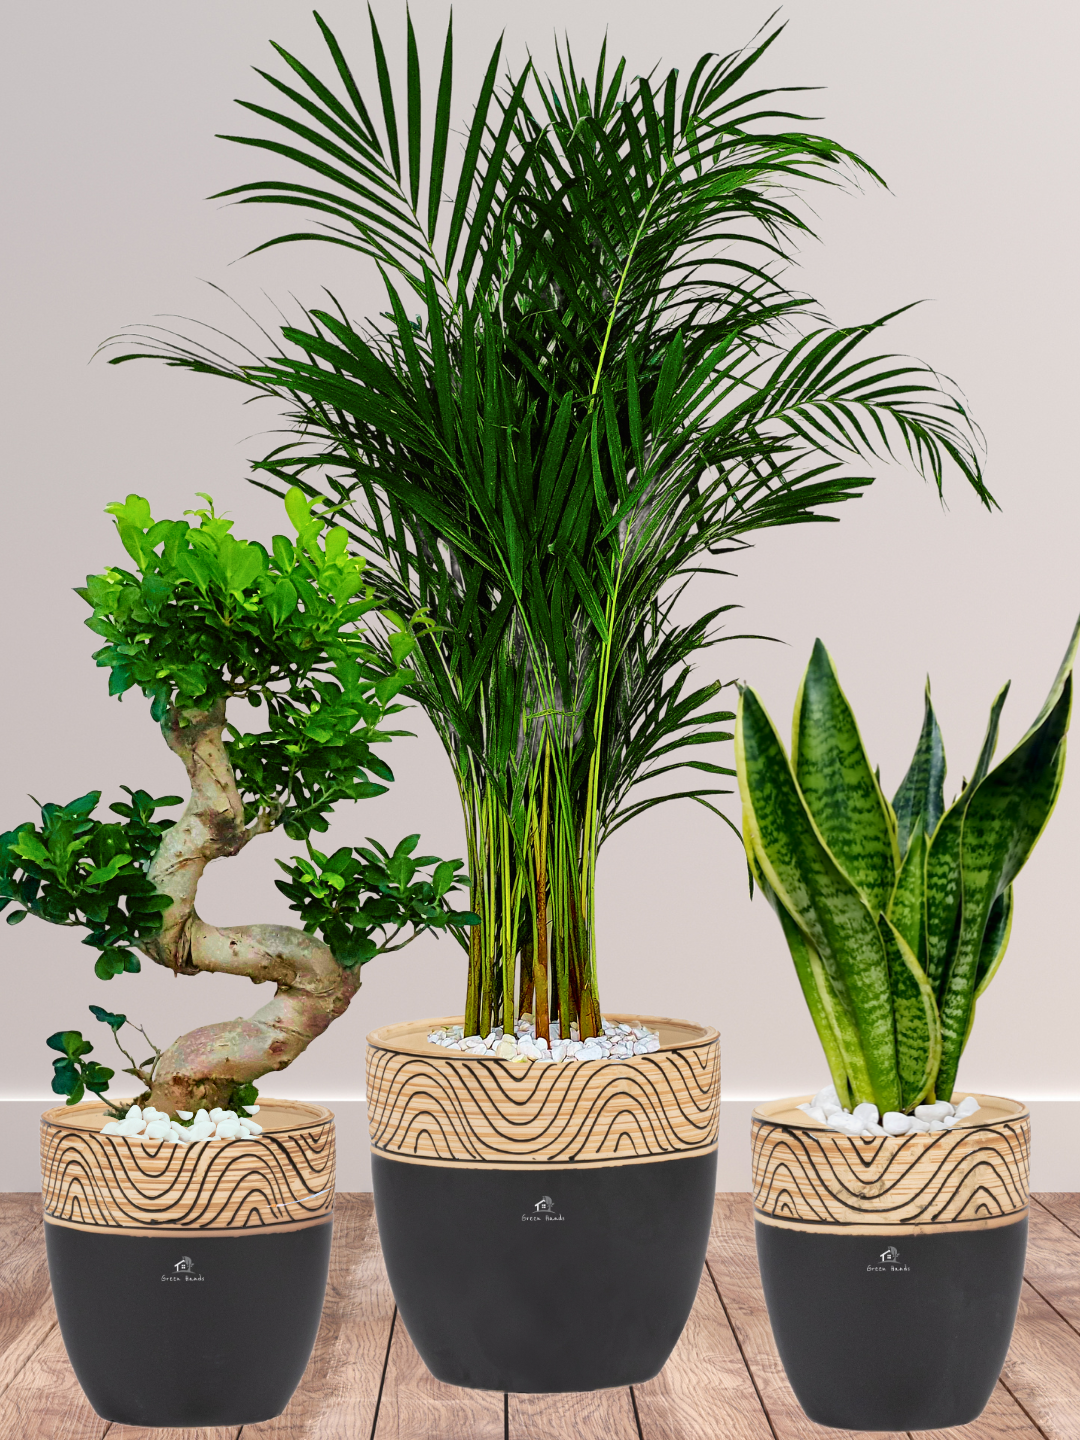 Bundle - Areca Palm, Snake, S Bonsai Tree in Standard Ceramic Wooden Black Pots